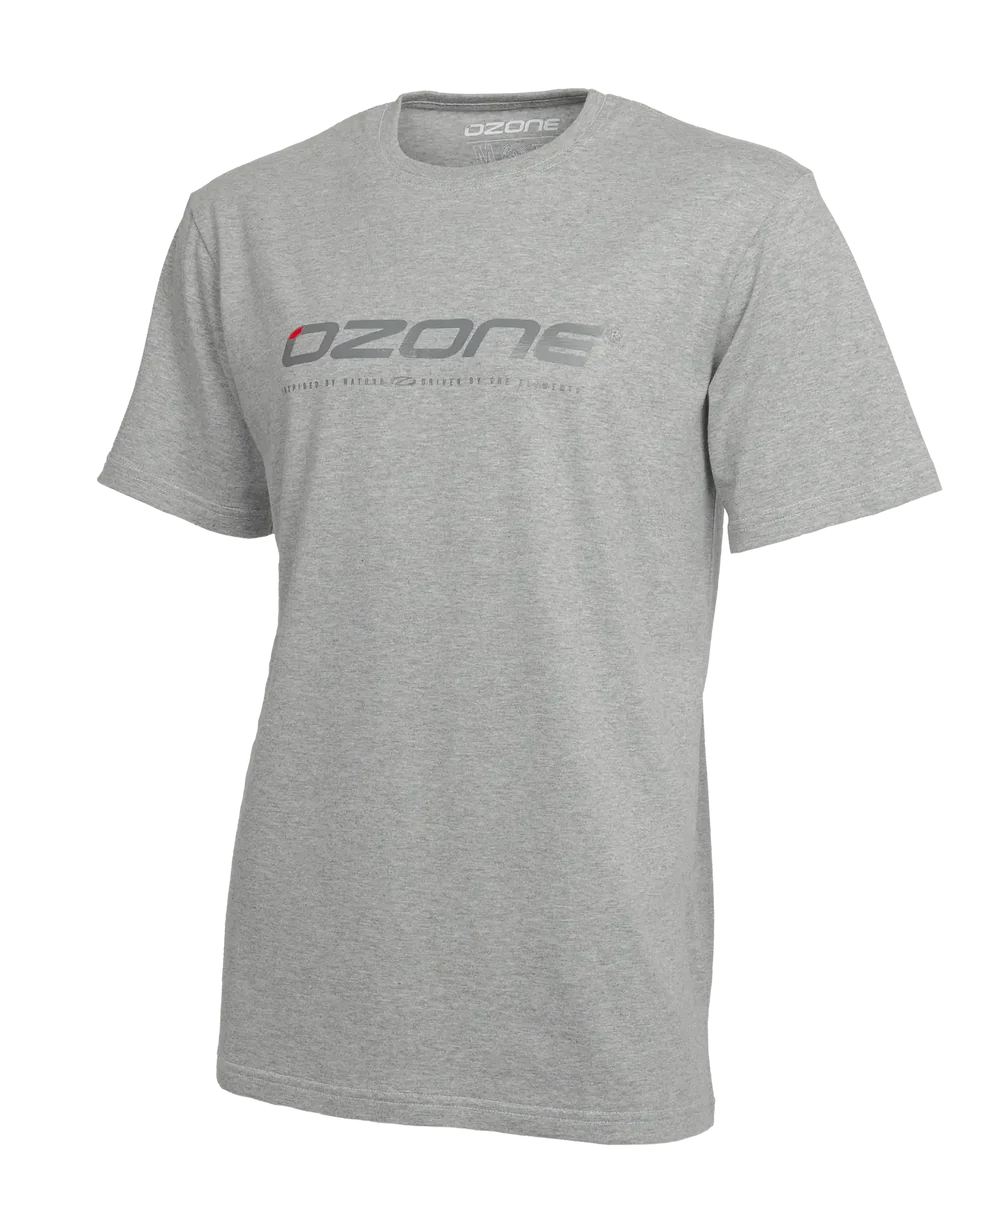 Mens Organic Cotton T-Shirt